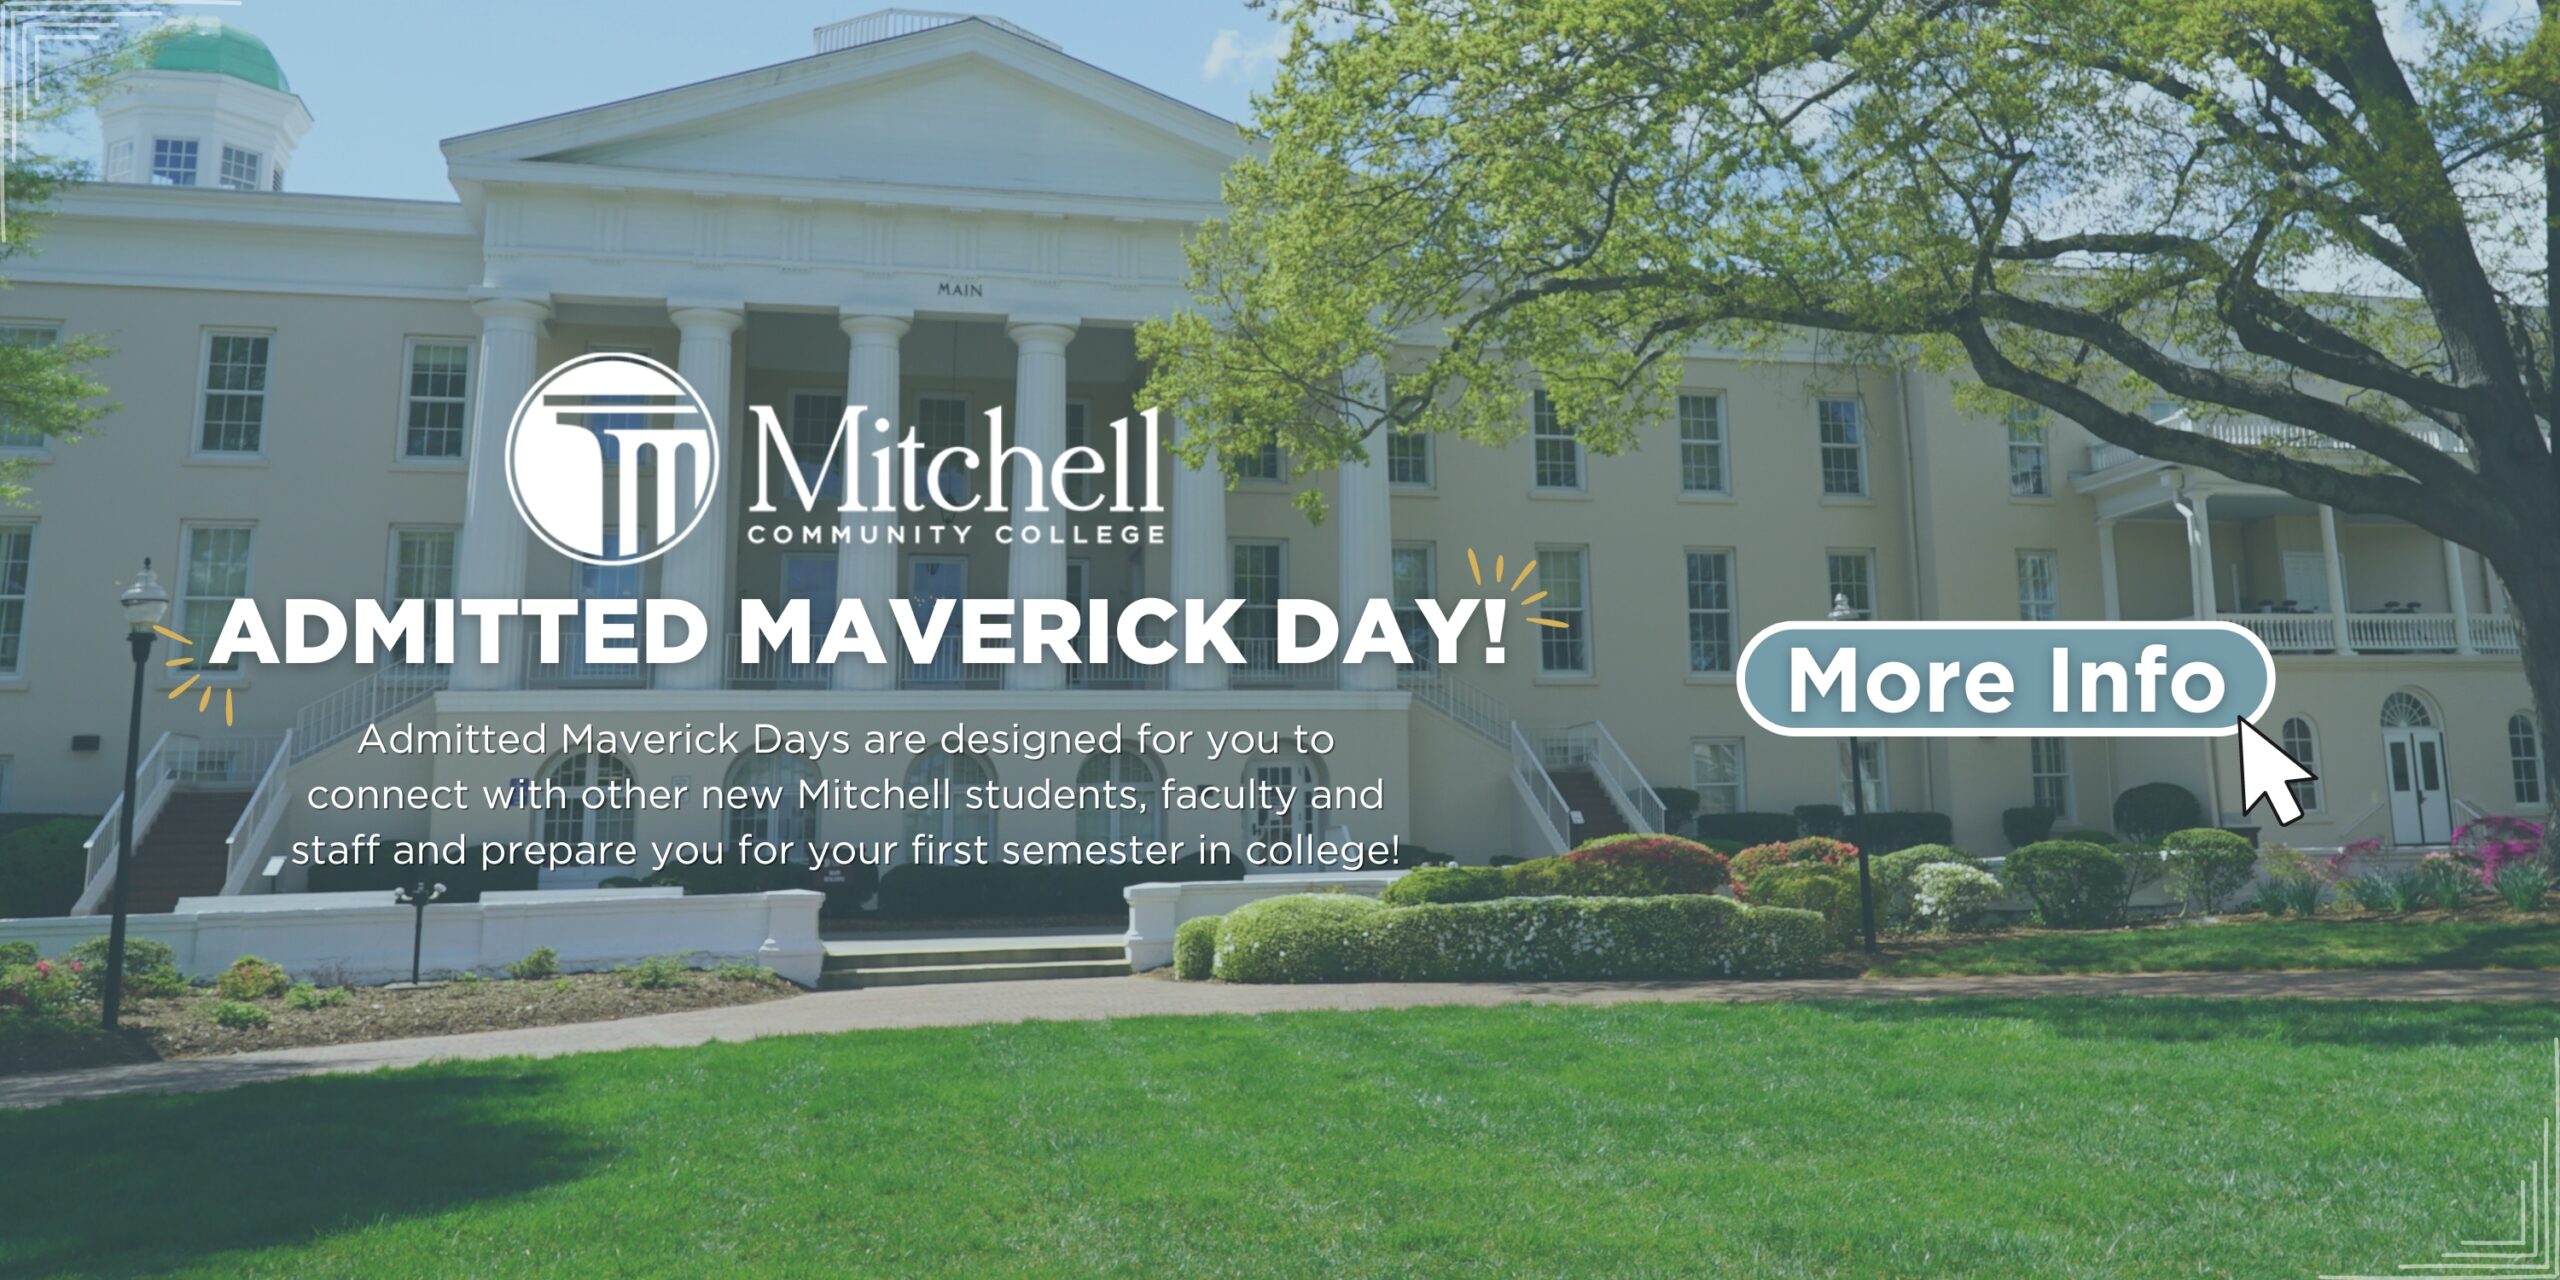 Admitted Maverick Day에 대해 자세히 알아보려면 이 배너를 클릭하세요!